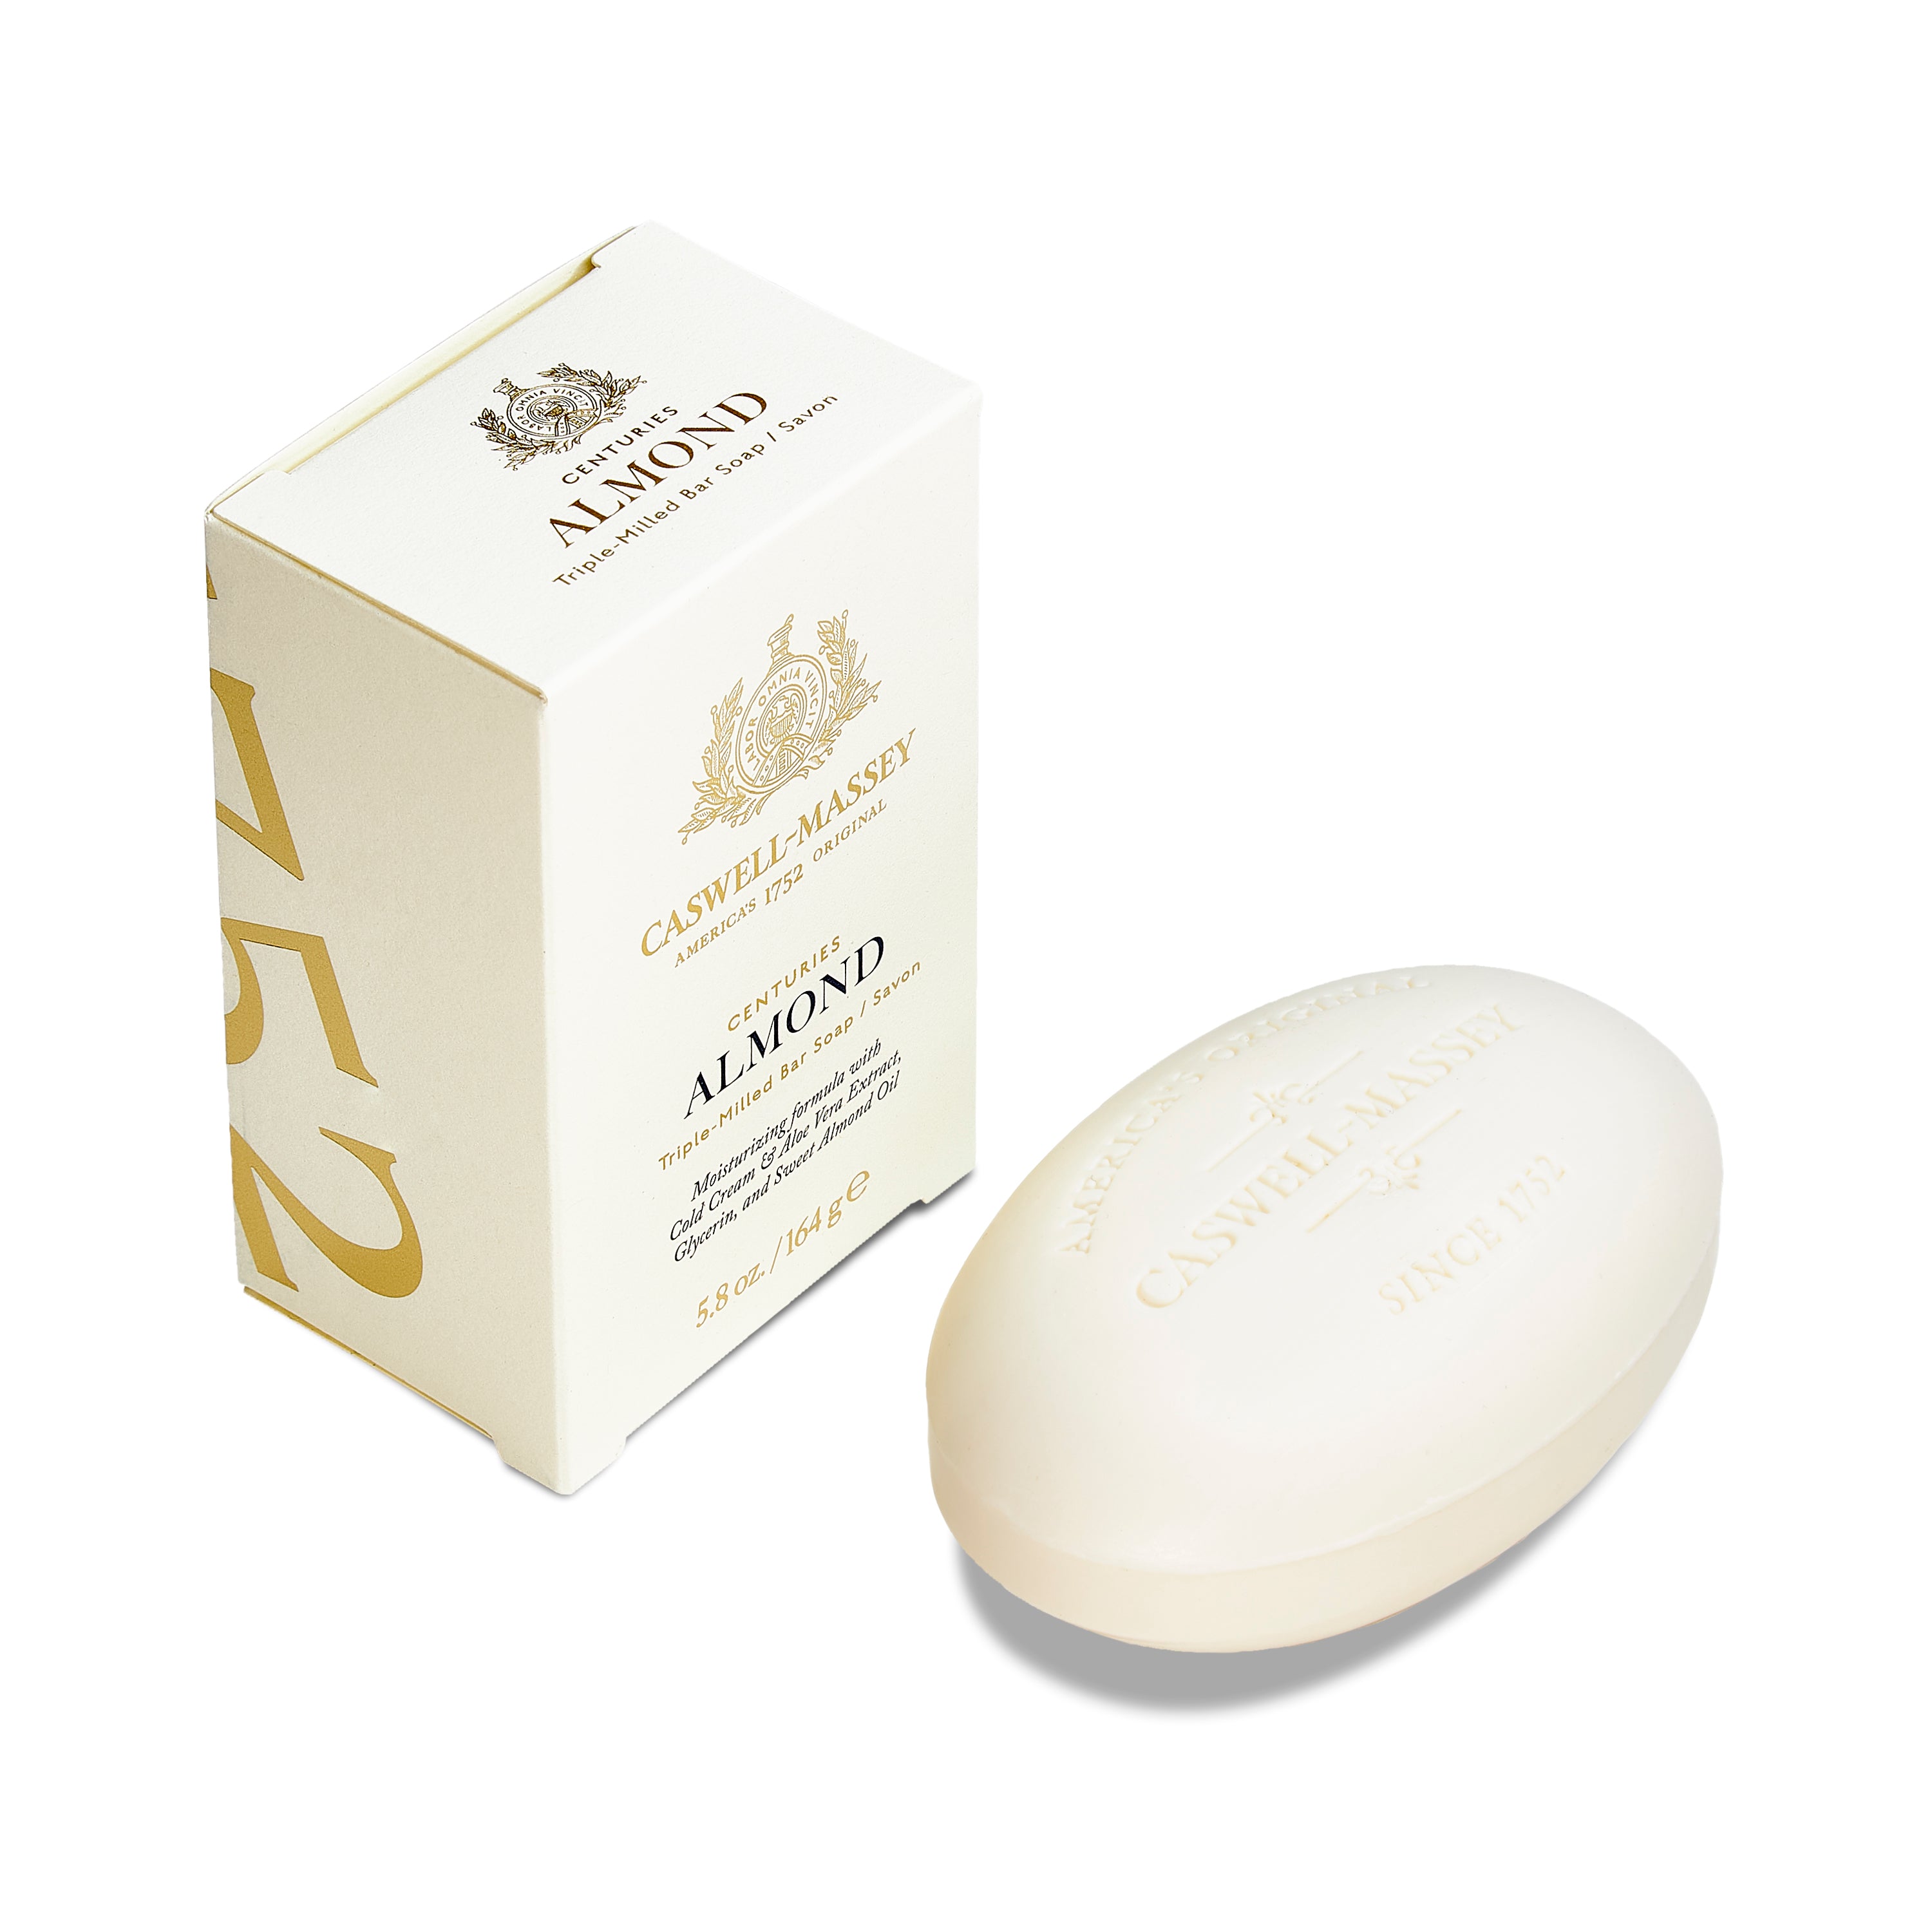 Caswell-Massey® Centuries Almond Bar Soap shown next to cream box